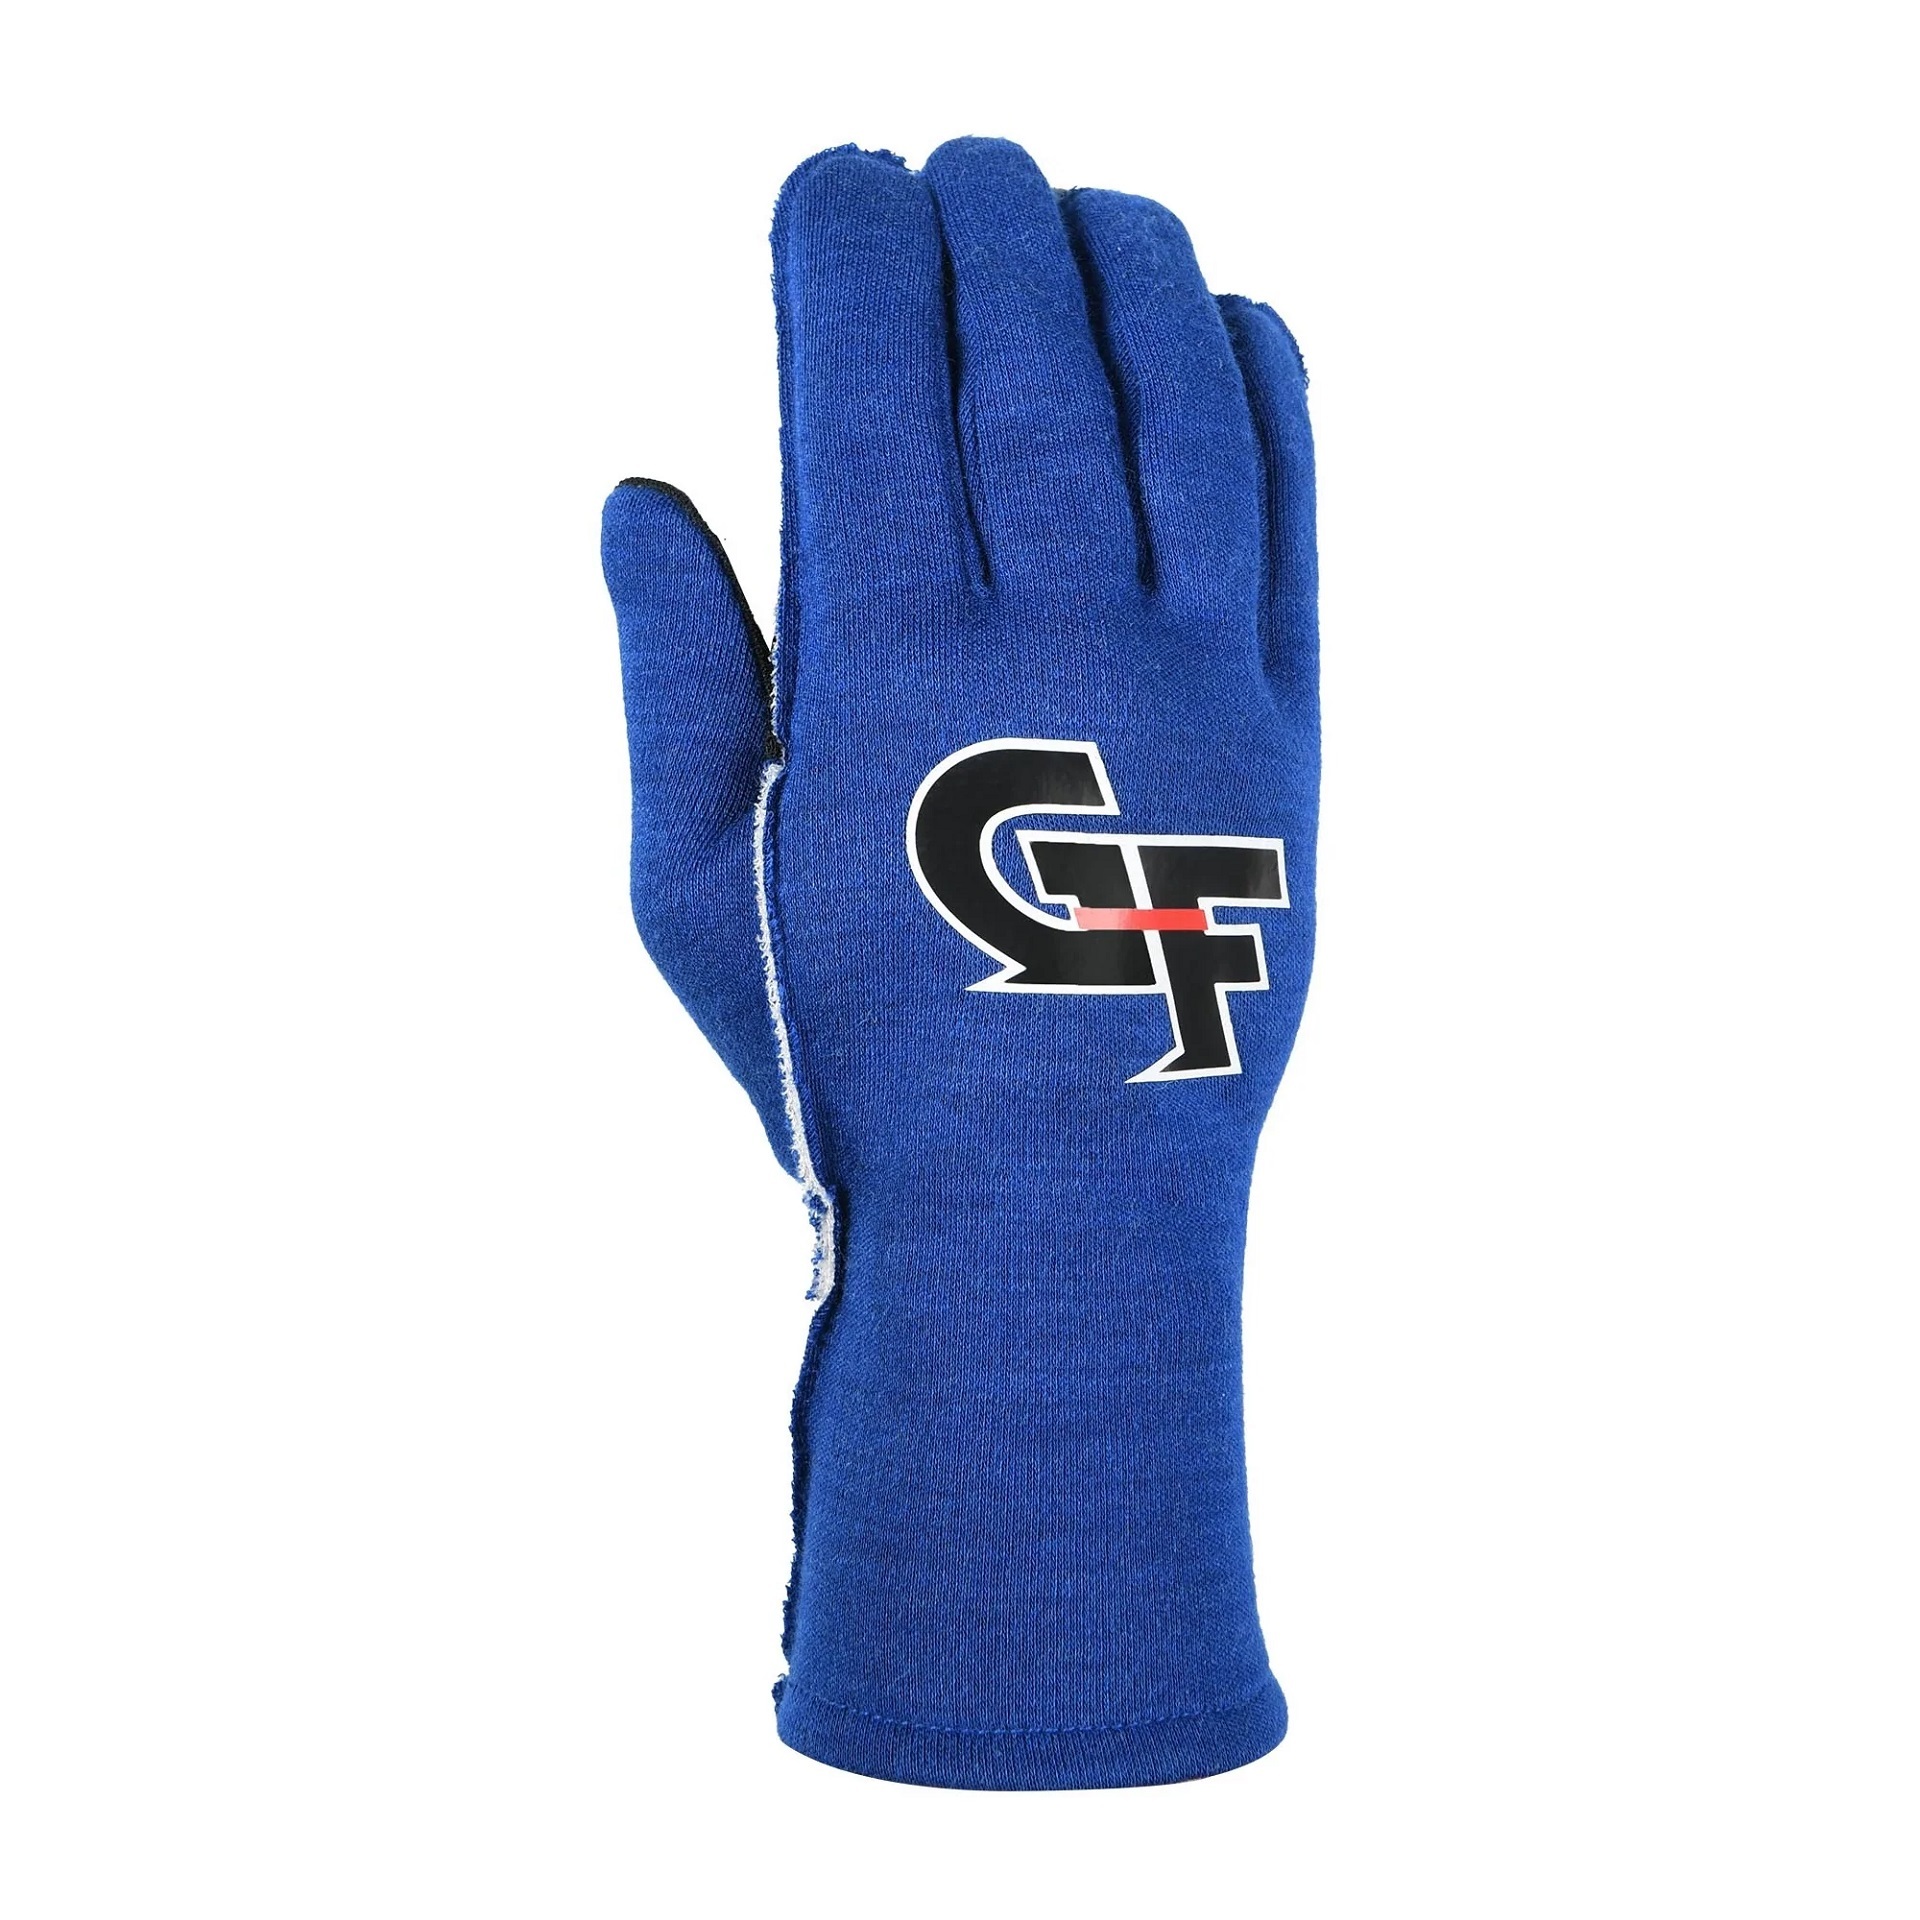 G-FORCE Gloves G-Limit Medium Blue